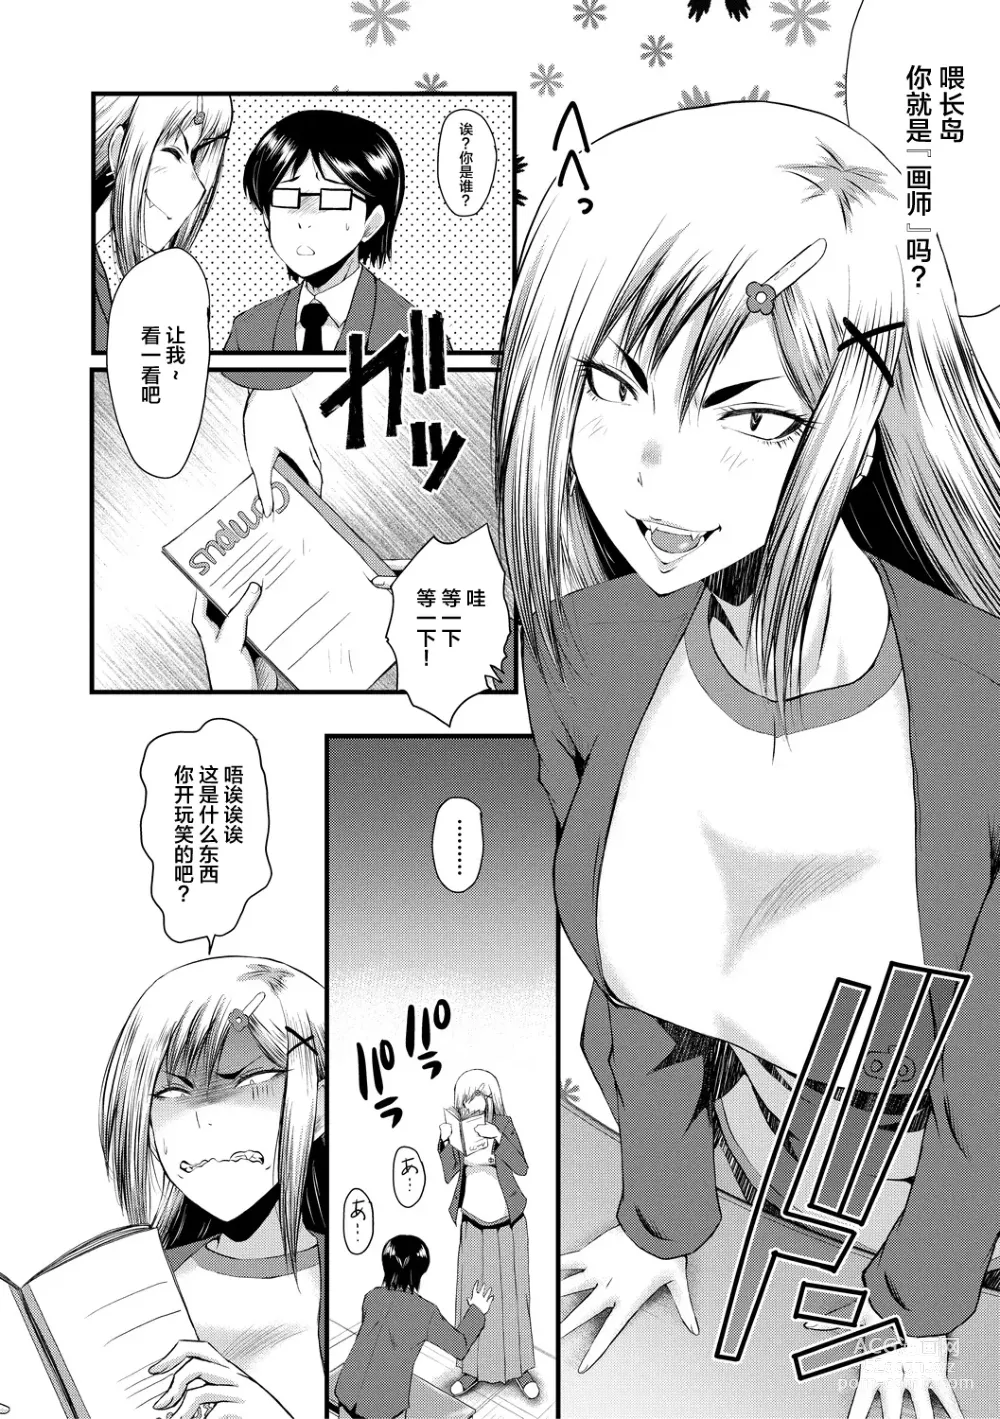 Page 14 of manga Sennou Kikan